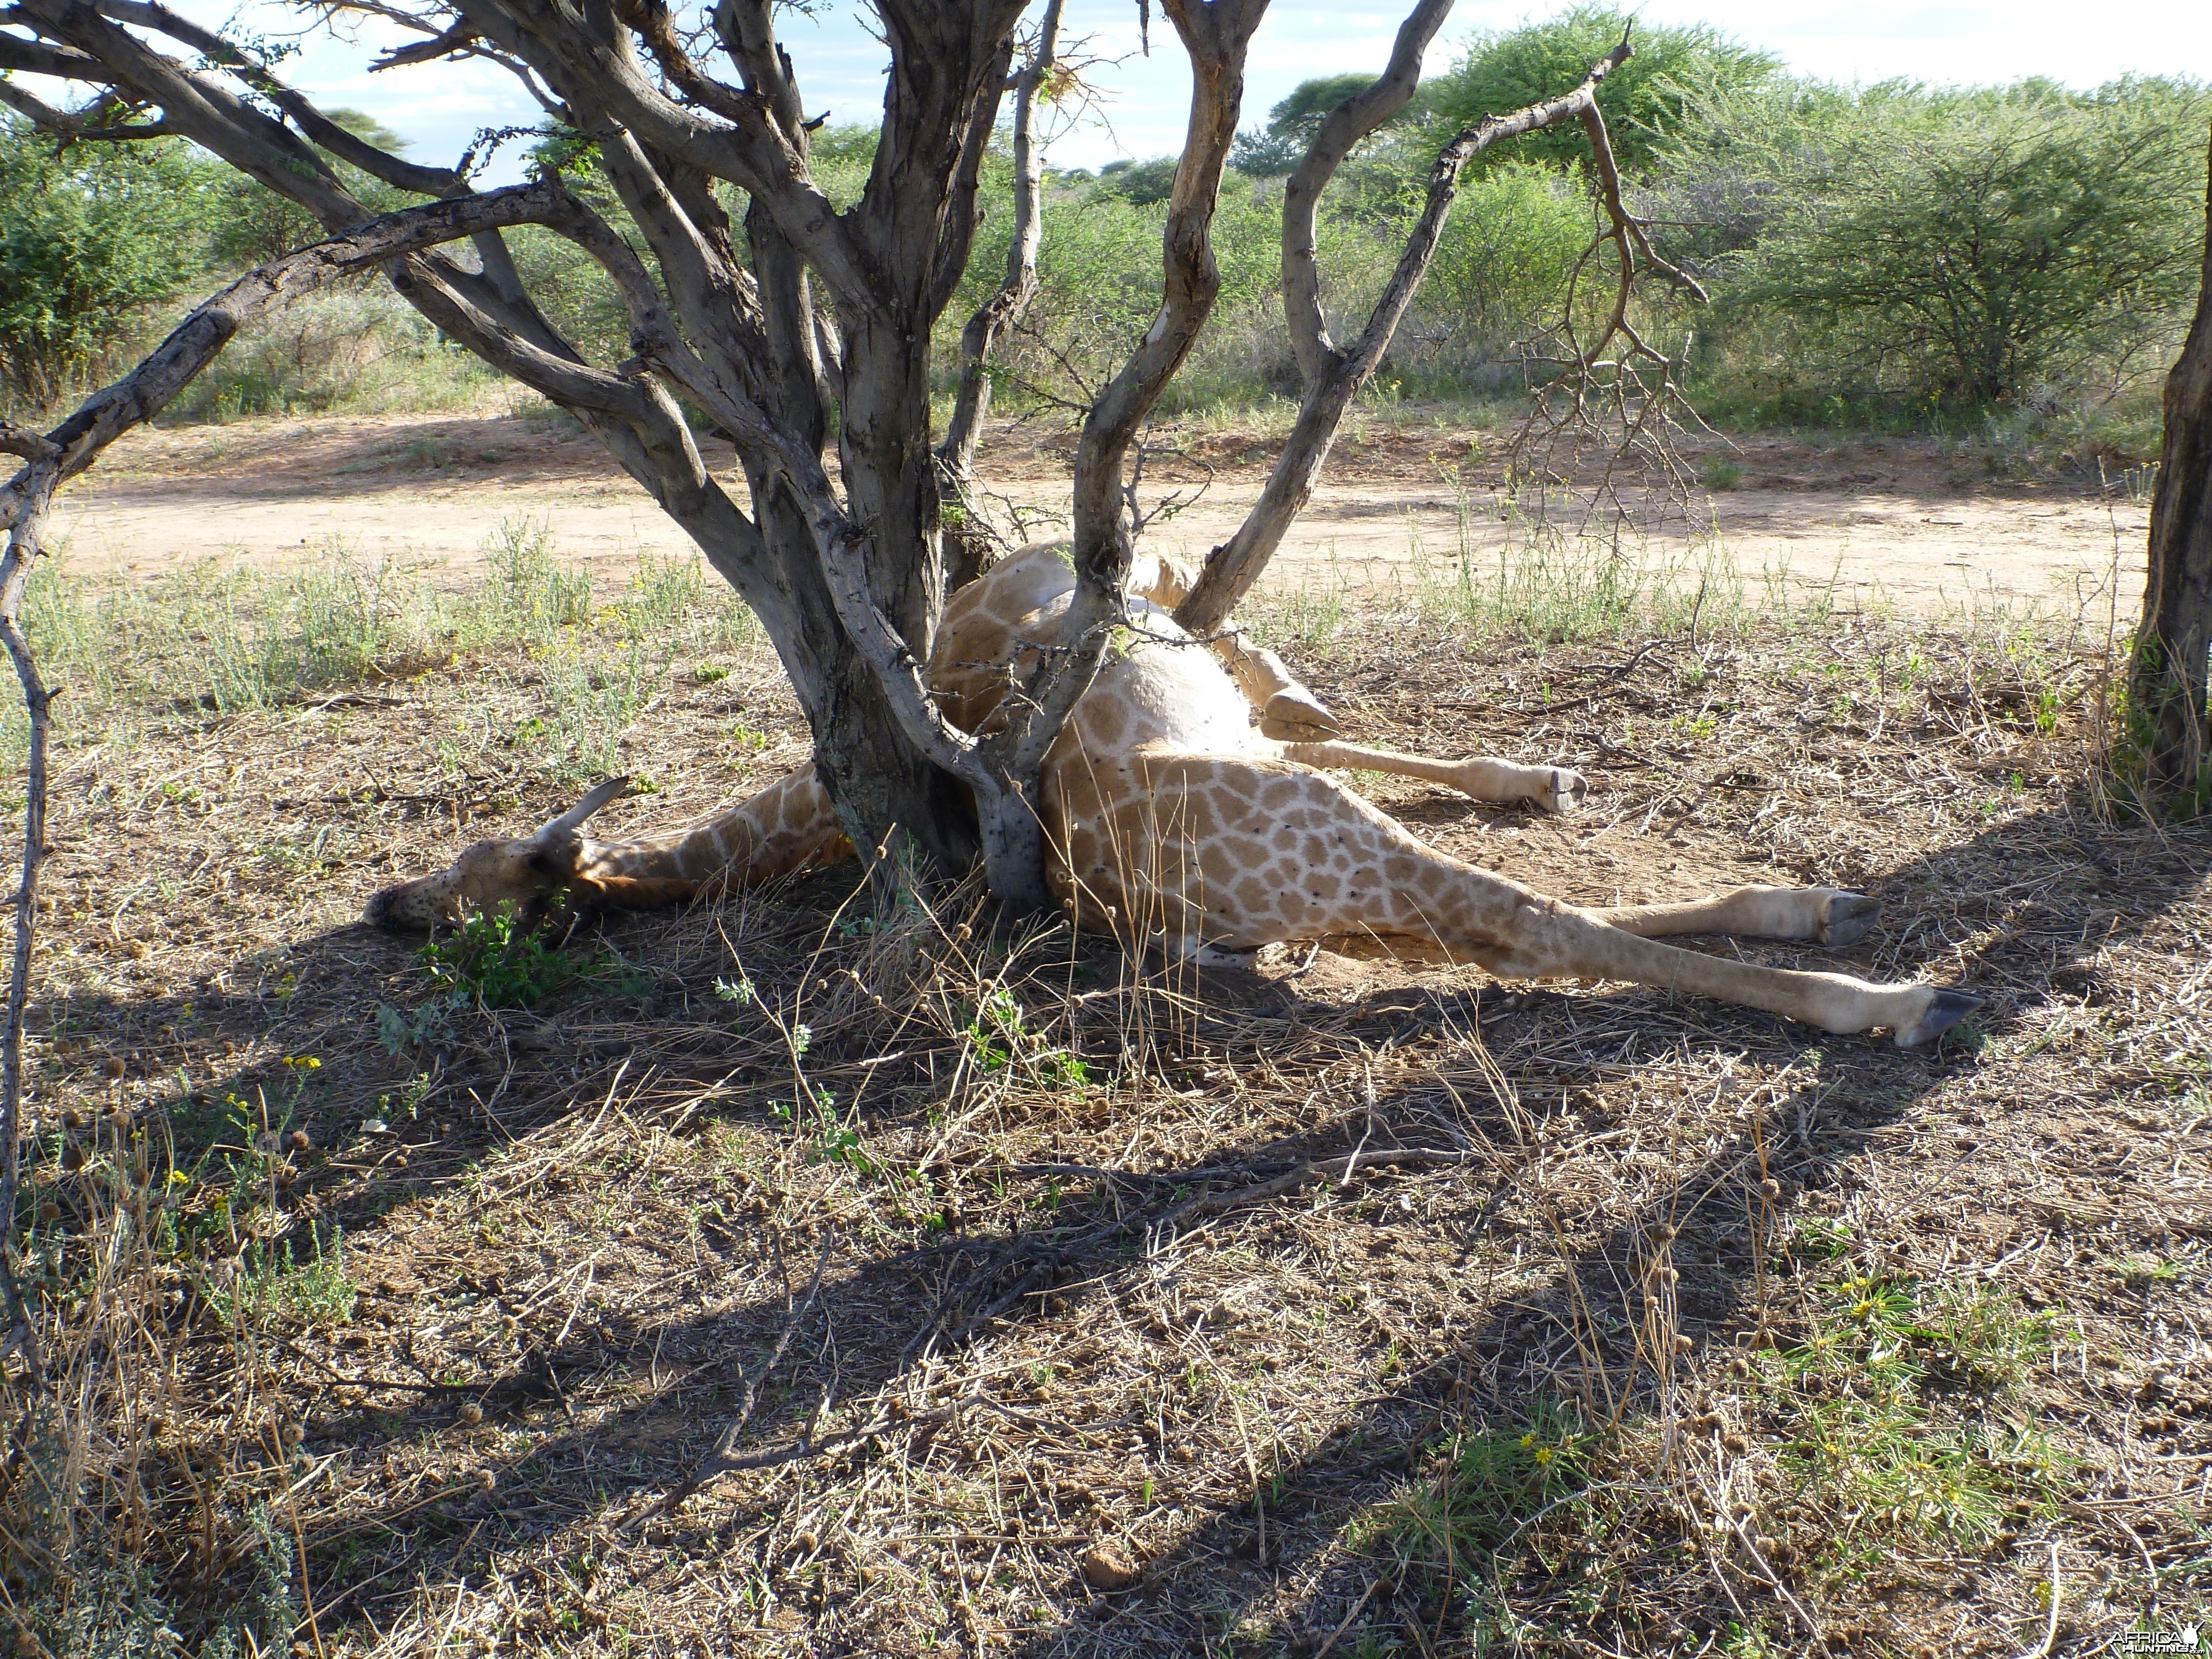 Dead Giraffe Namibia